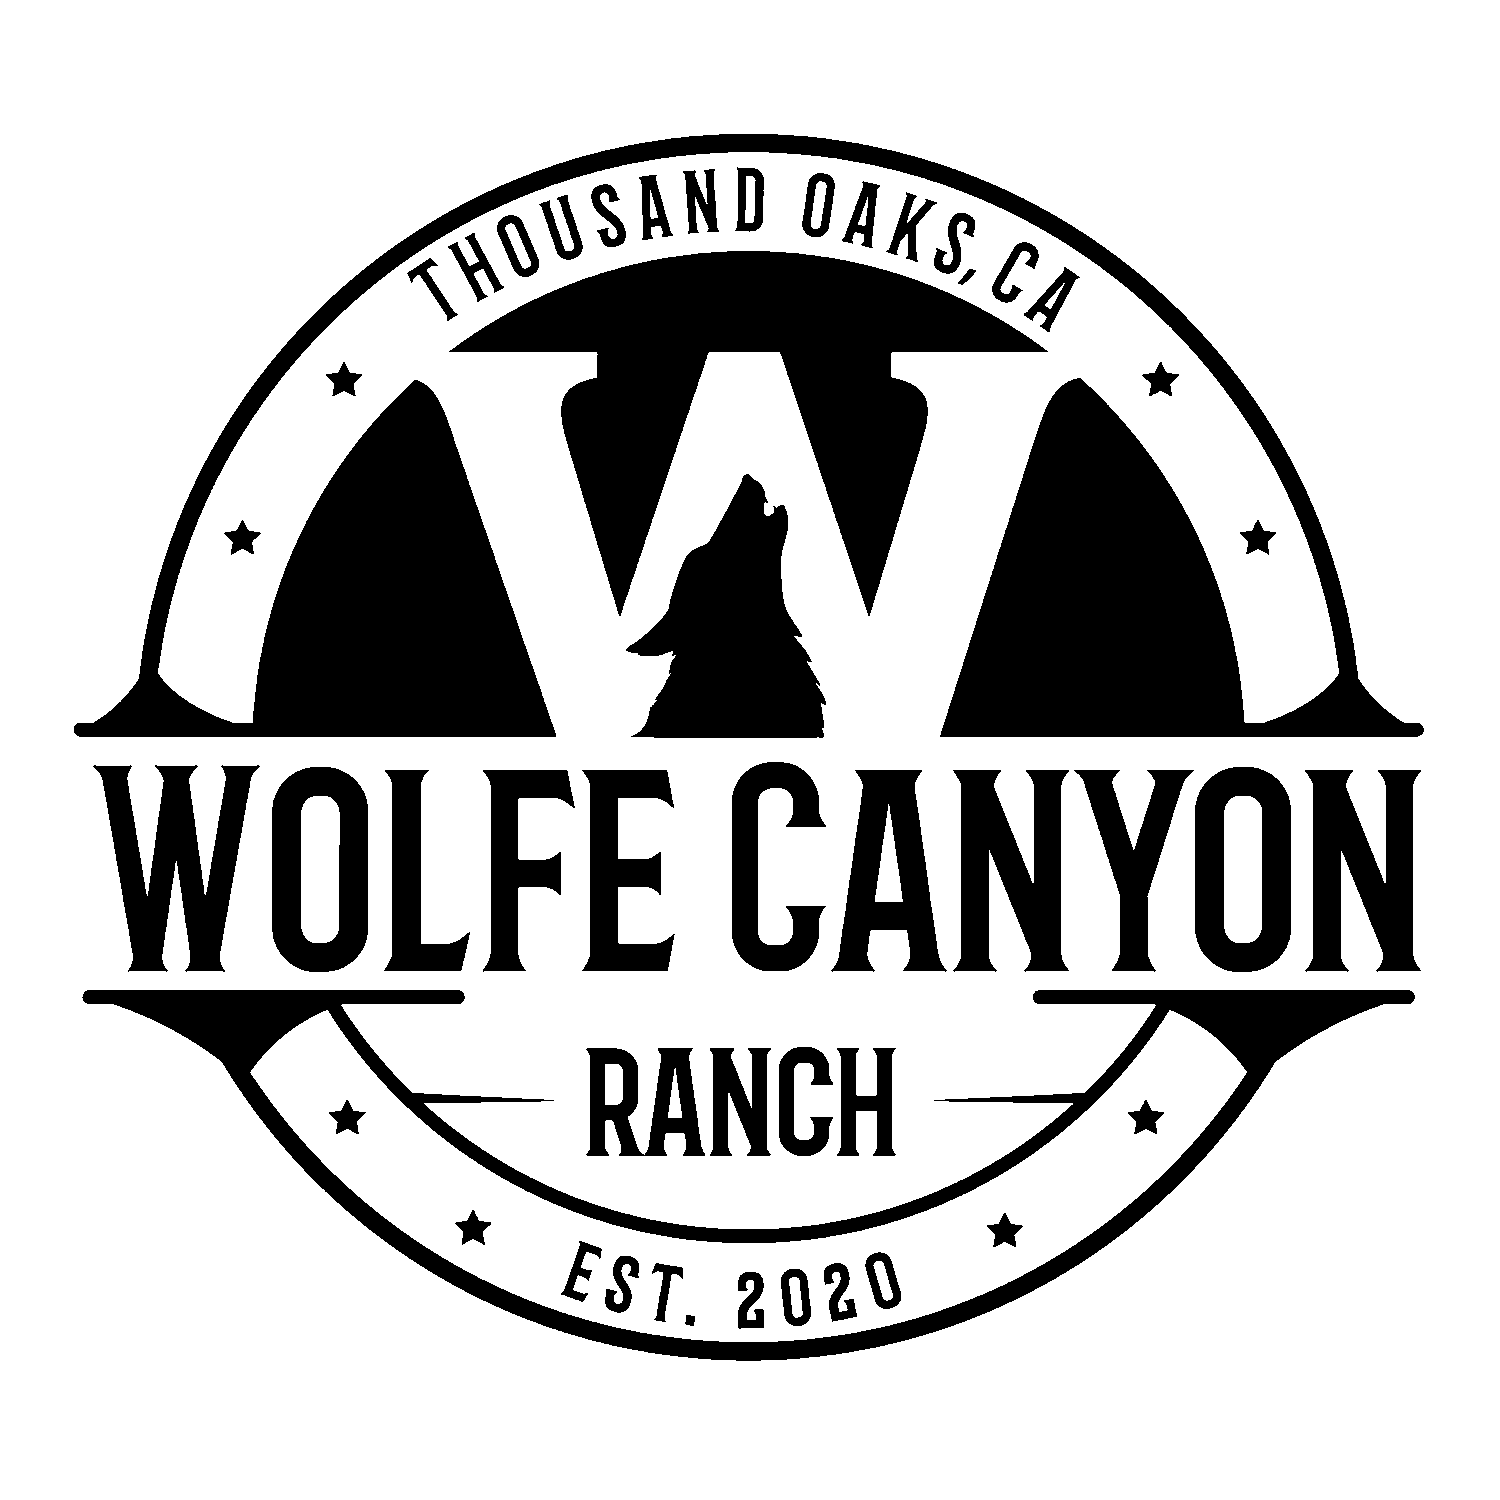 Wolfe Canyon Ranch - Thousand Oaks